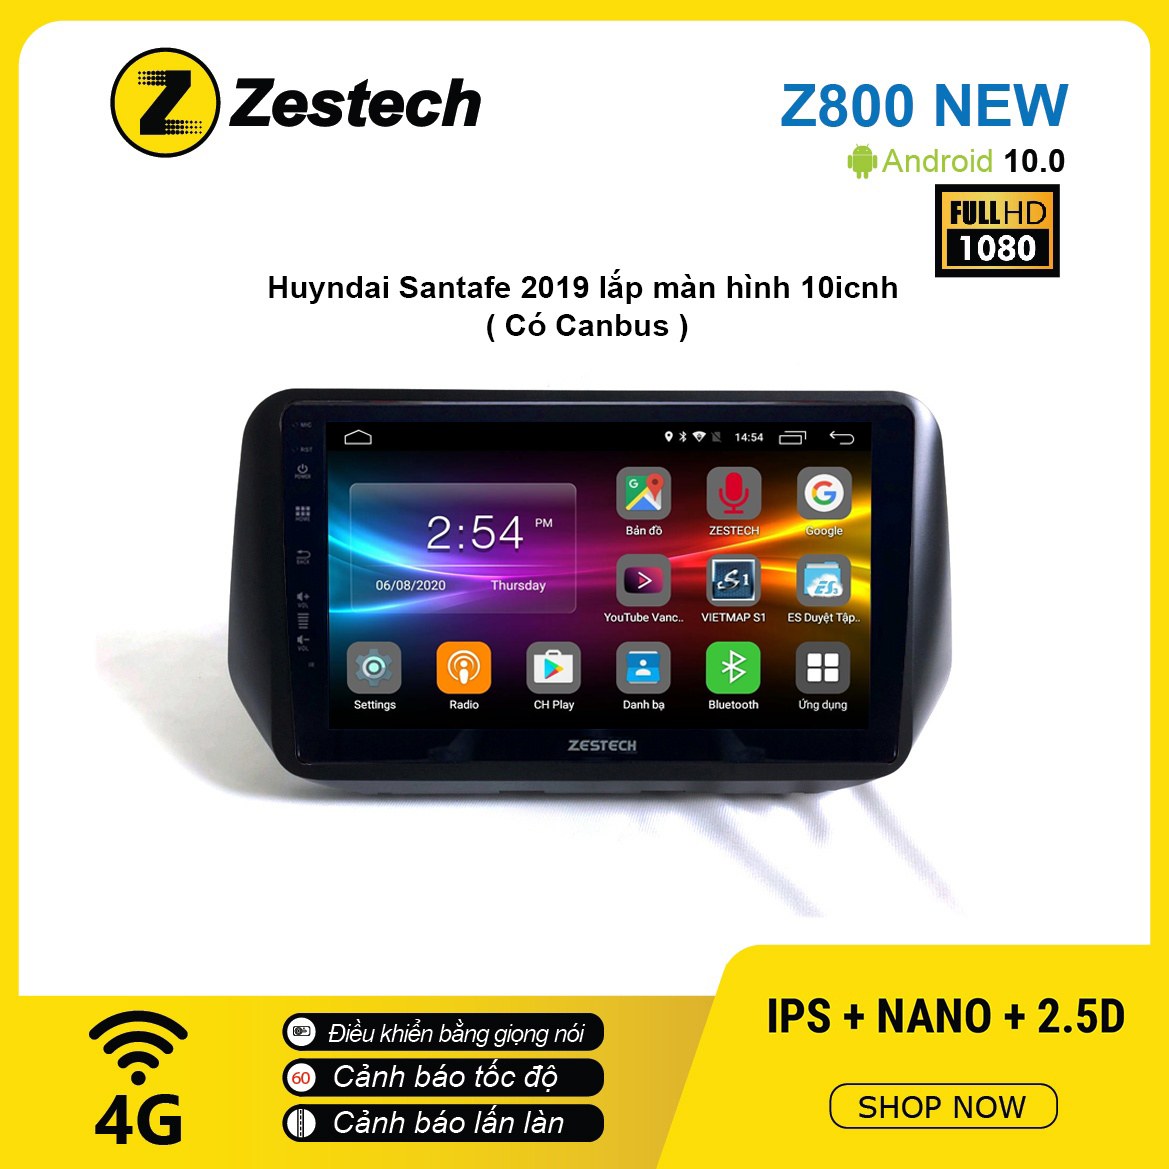 Man Hinh O To Dvd Android Z800 New Huyndai Santafe 19 Co Canbus Zestech